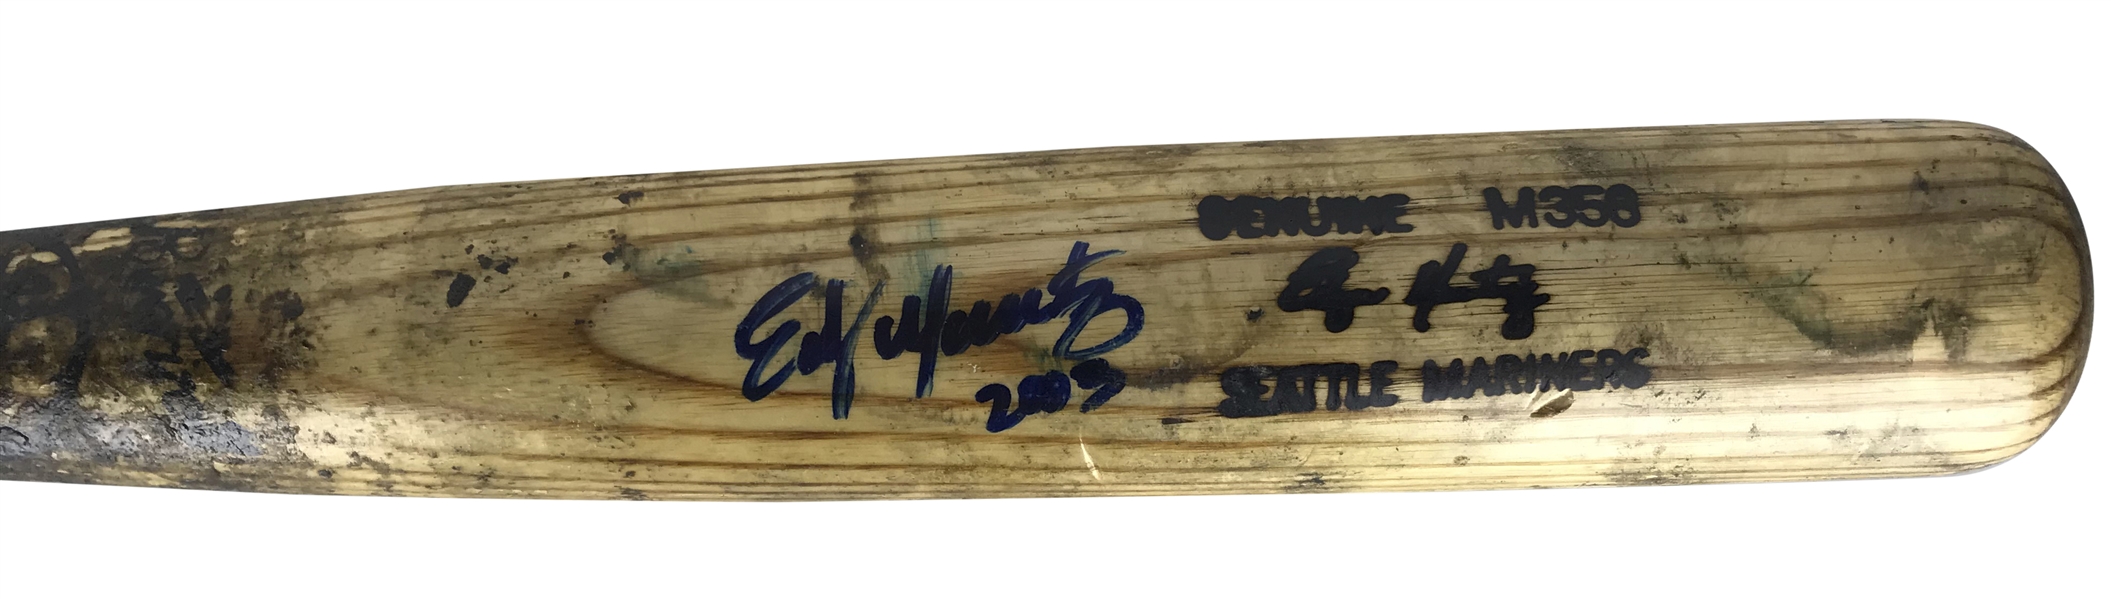 Edgar Martinez Signed & Game Used 2003 M356 Baseball Bat w/ Possible Illegal Pine Tar! - PSA/DNA GU 10!